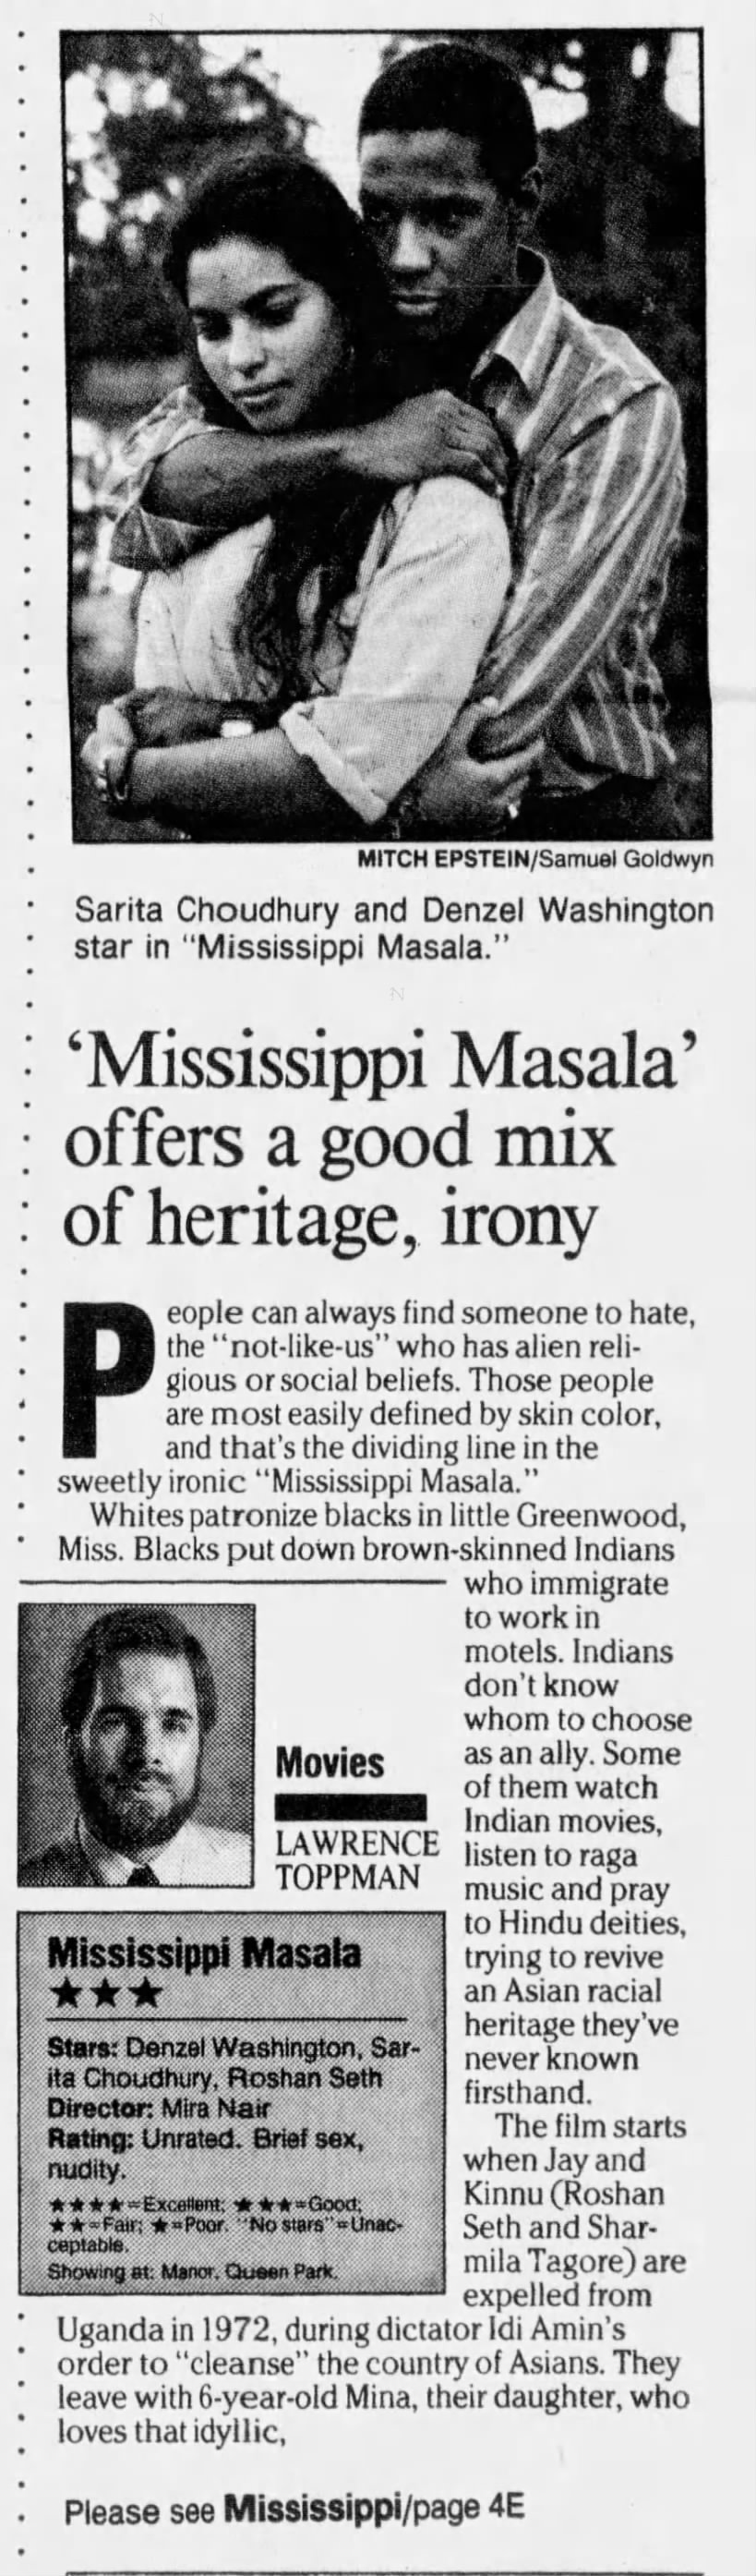 Mississippi Masala (1/2)*